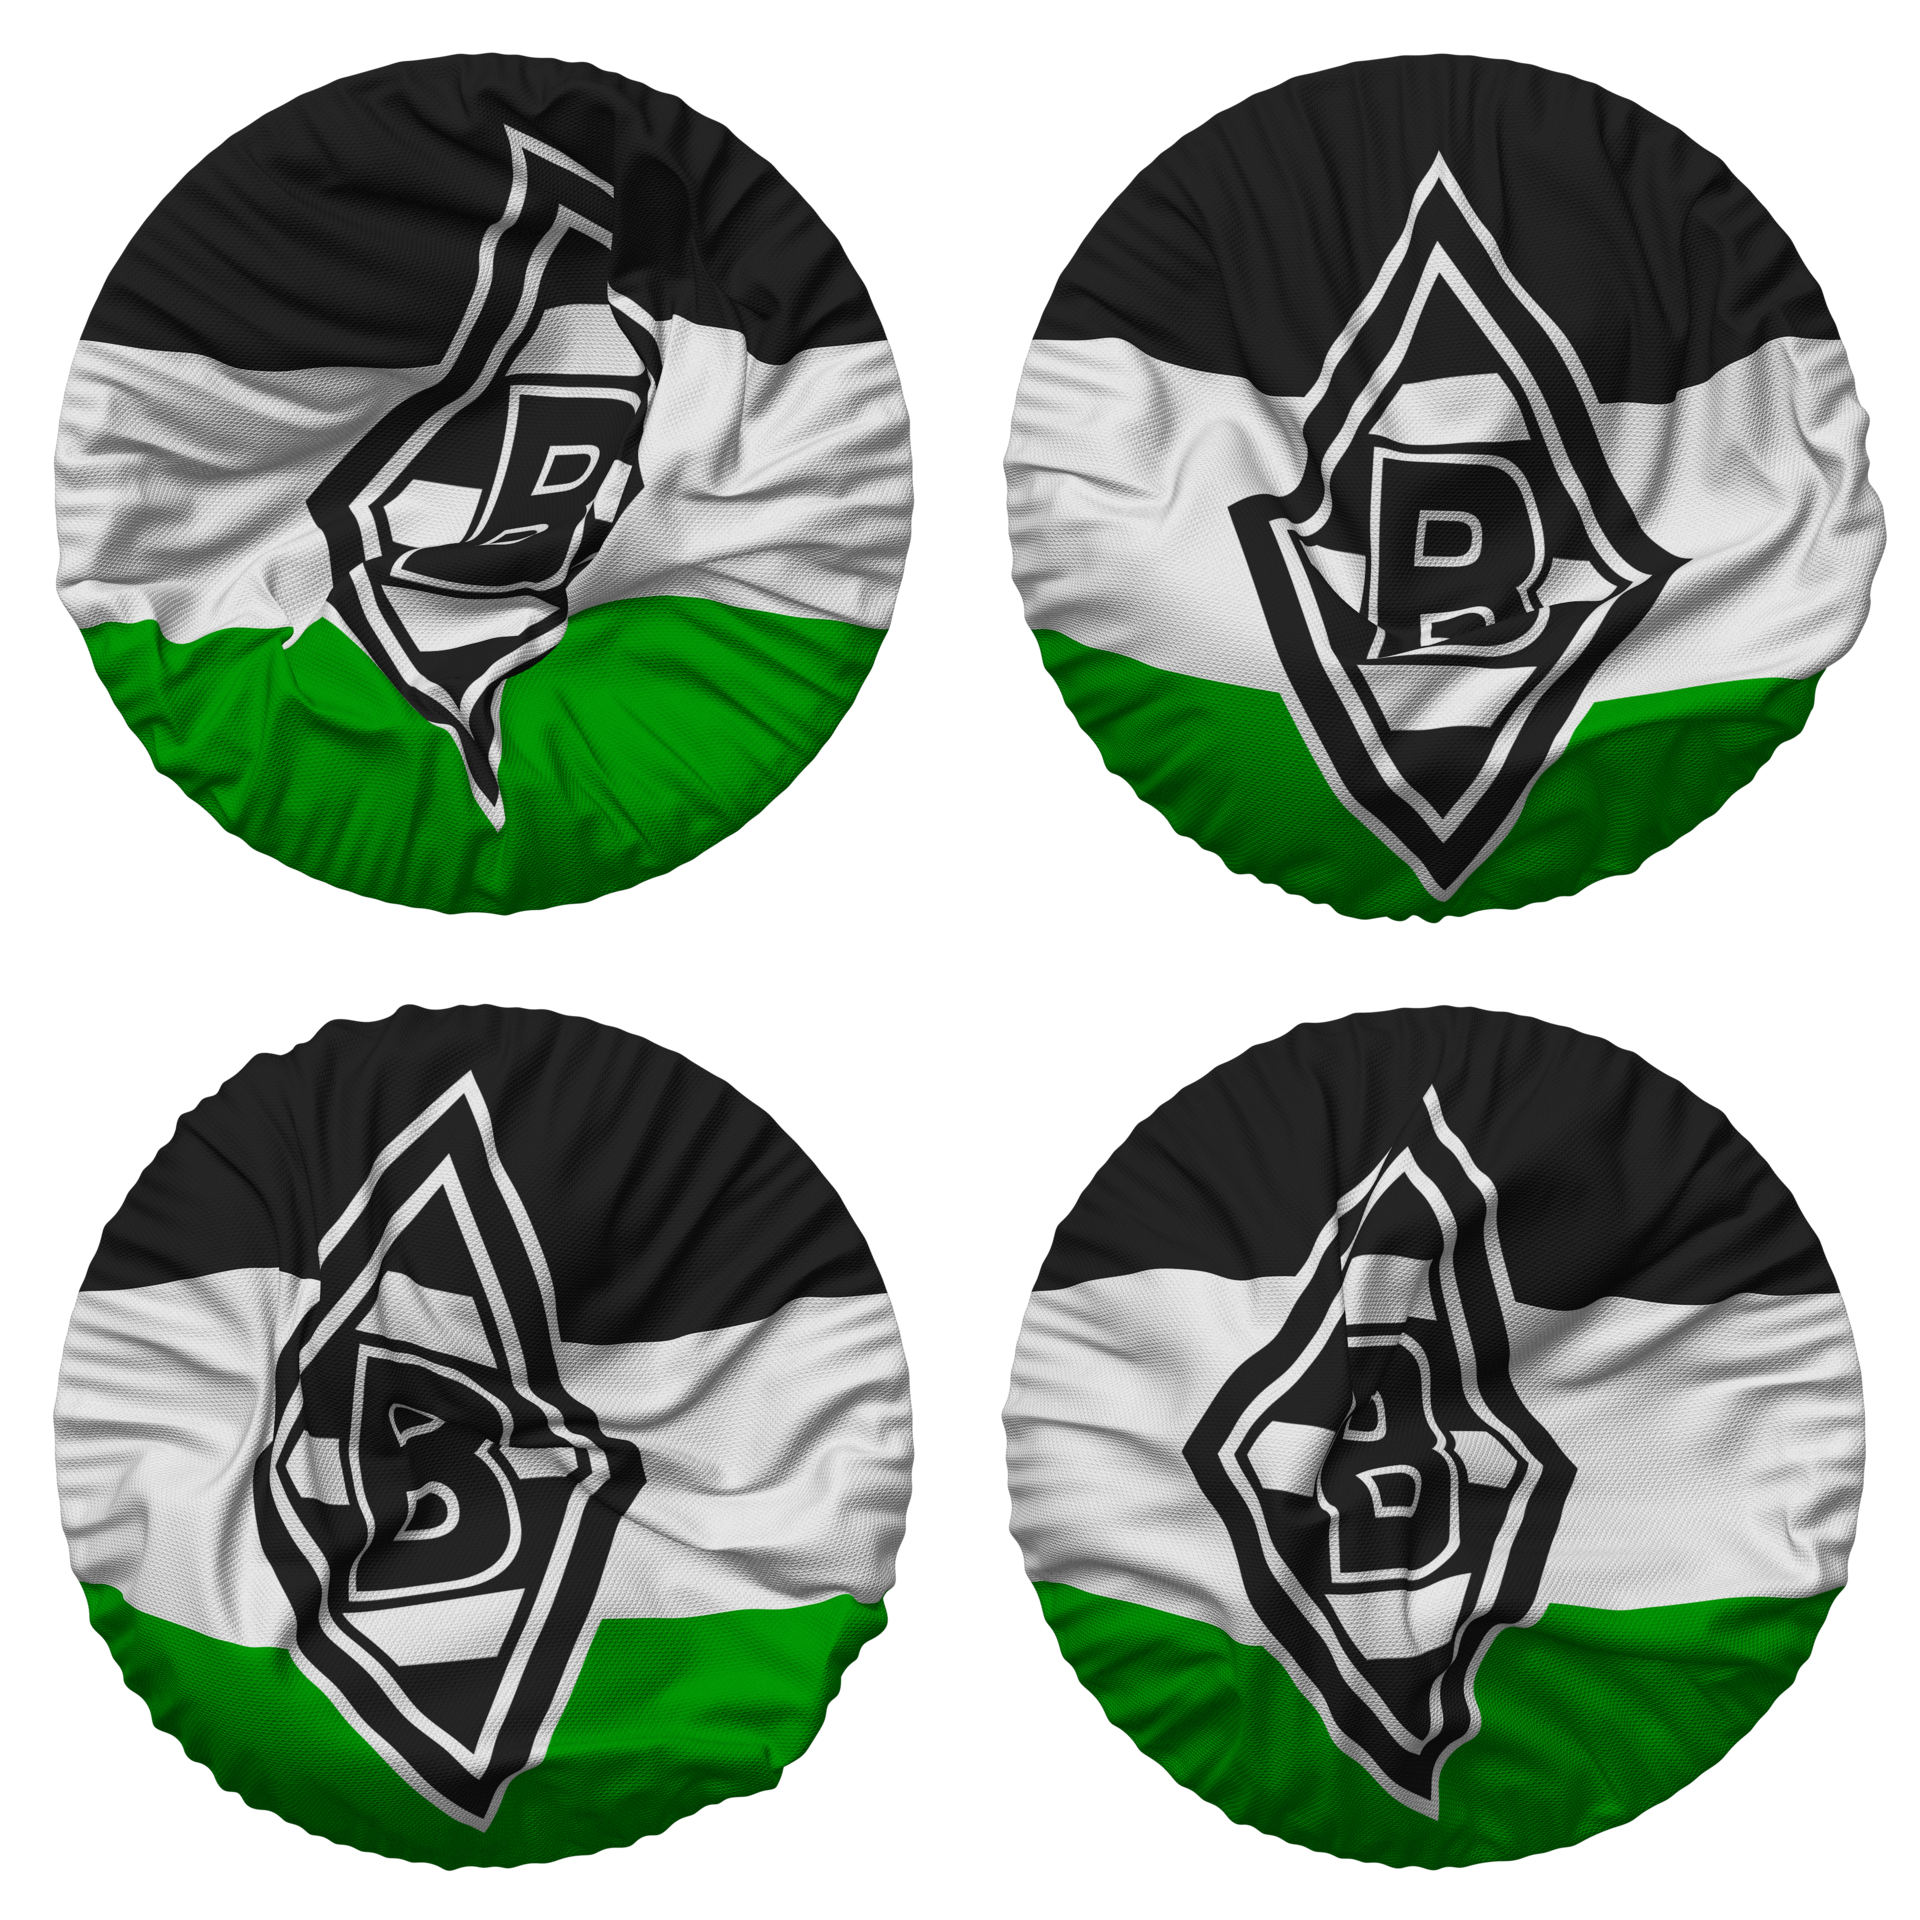  Borussia Mönchengladbach Hintergrundbild 1920x1920. Borussia Monchengladbach, Borussia MG, BMG Flag in Round Shape Isolated with Four Different Waving Style, Bump Texture, 3D Rendering 24797398 PNG